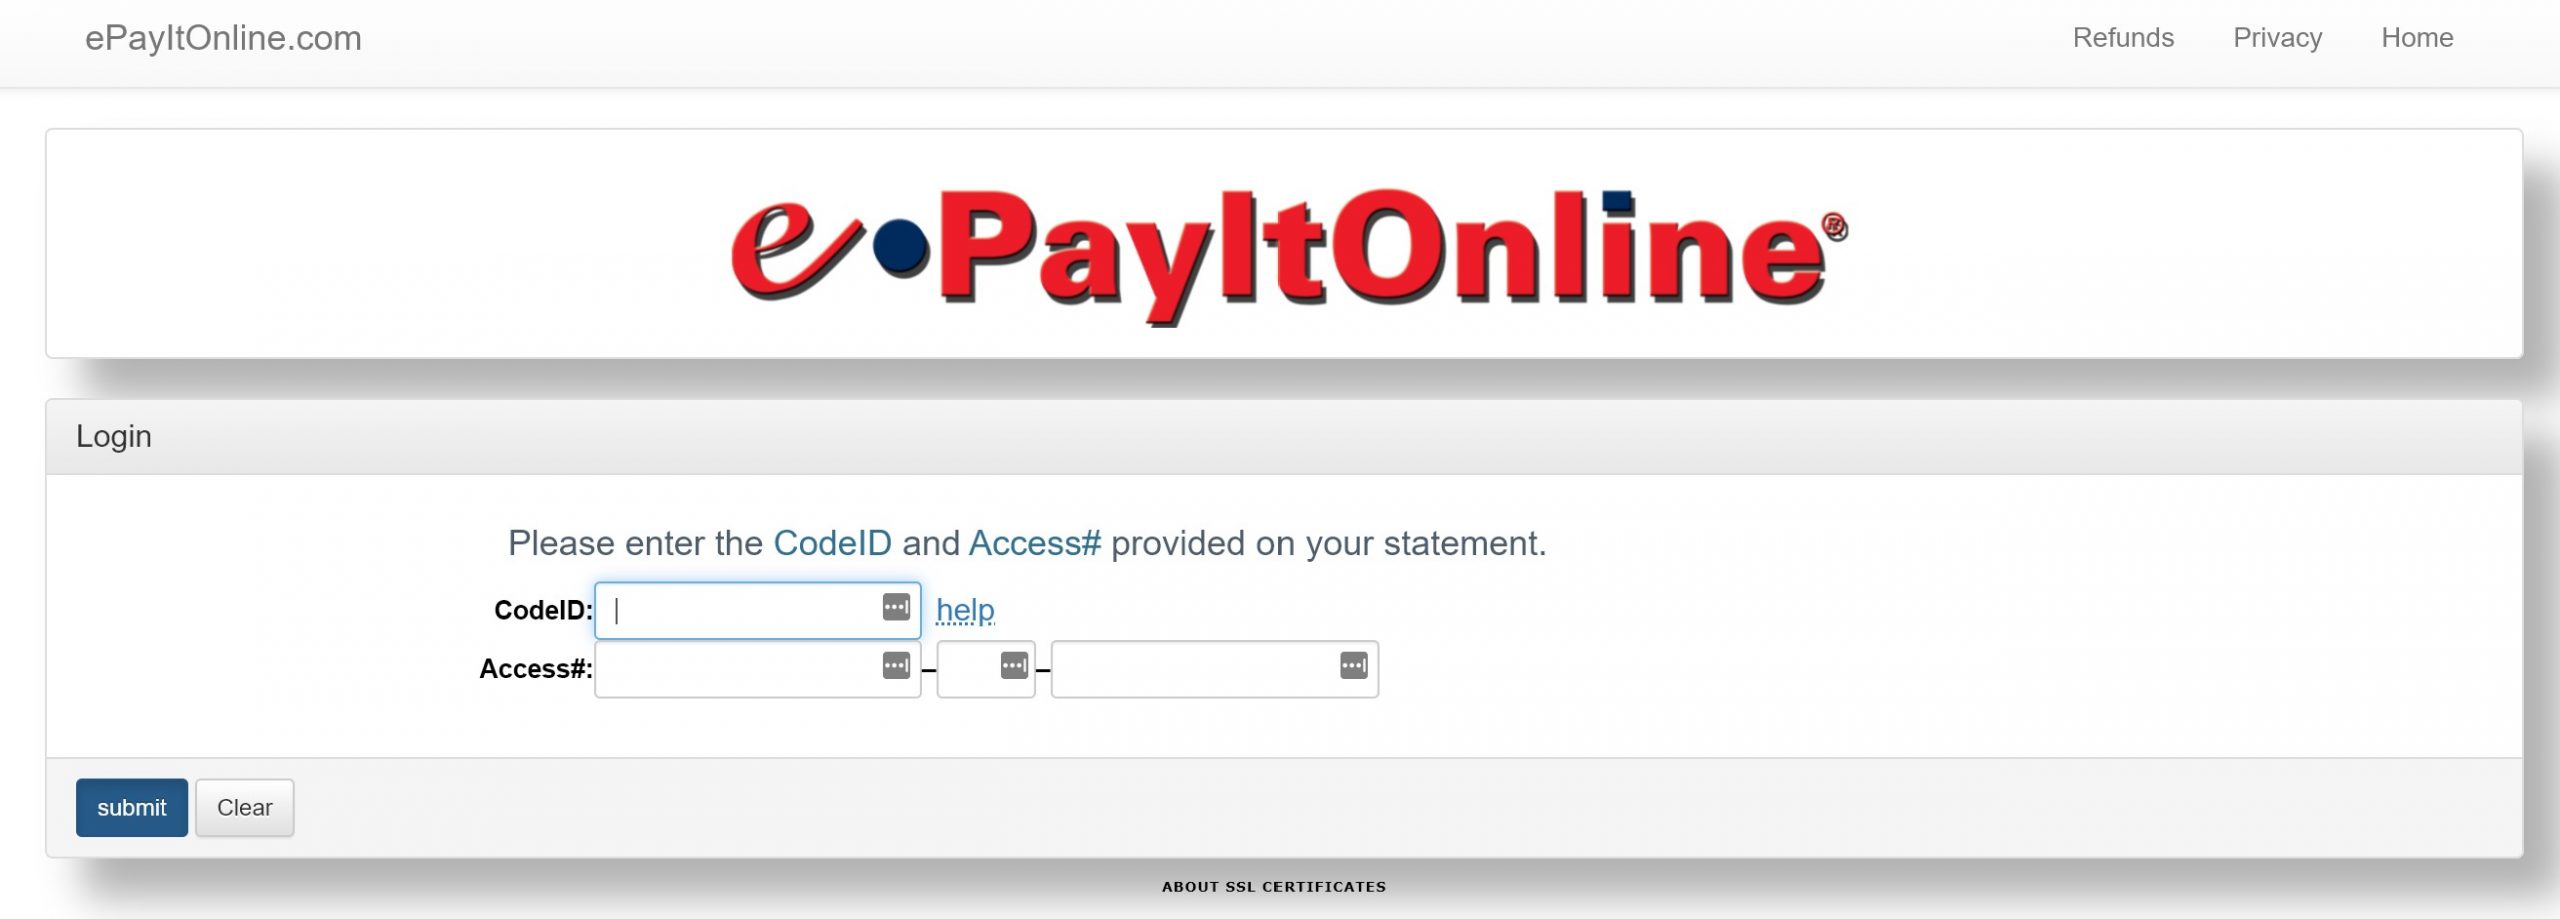 EpayItOnline Login at epayitonline.com | Pay your Medical Bills Online